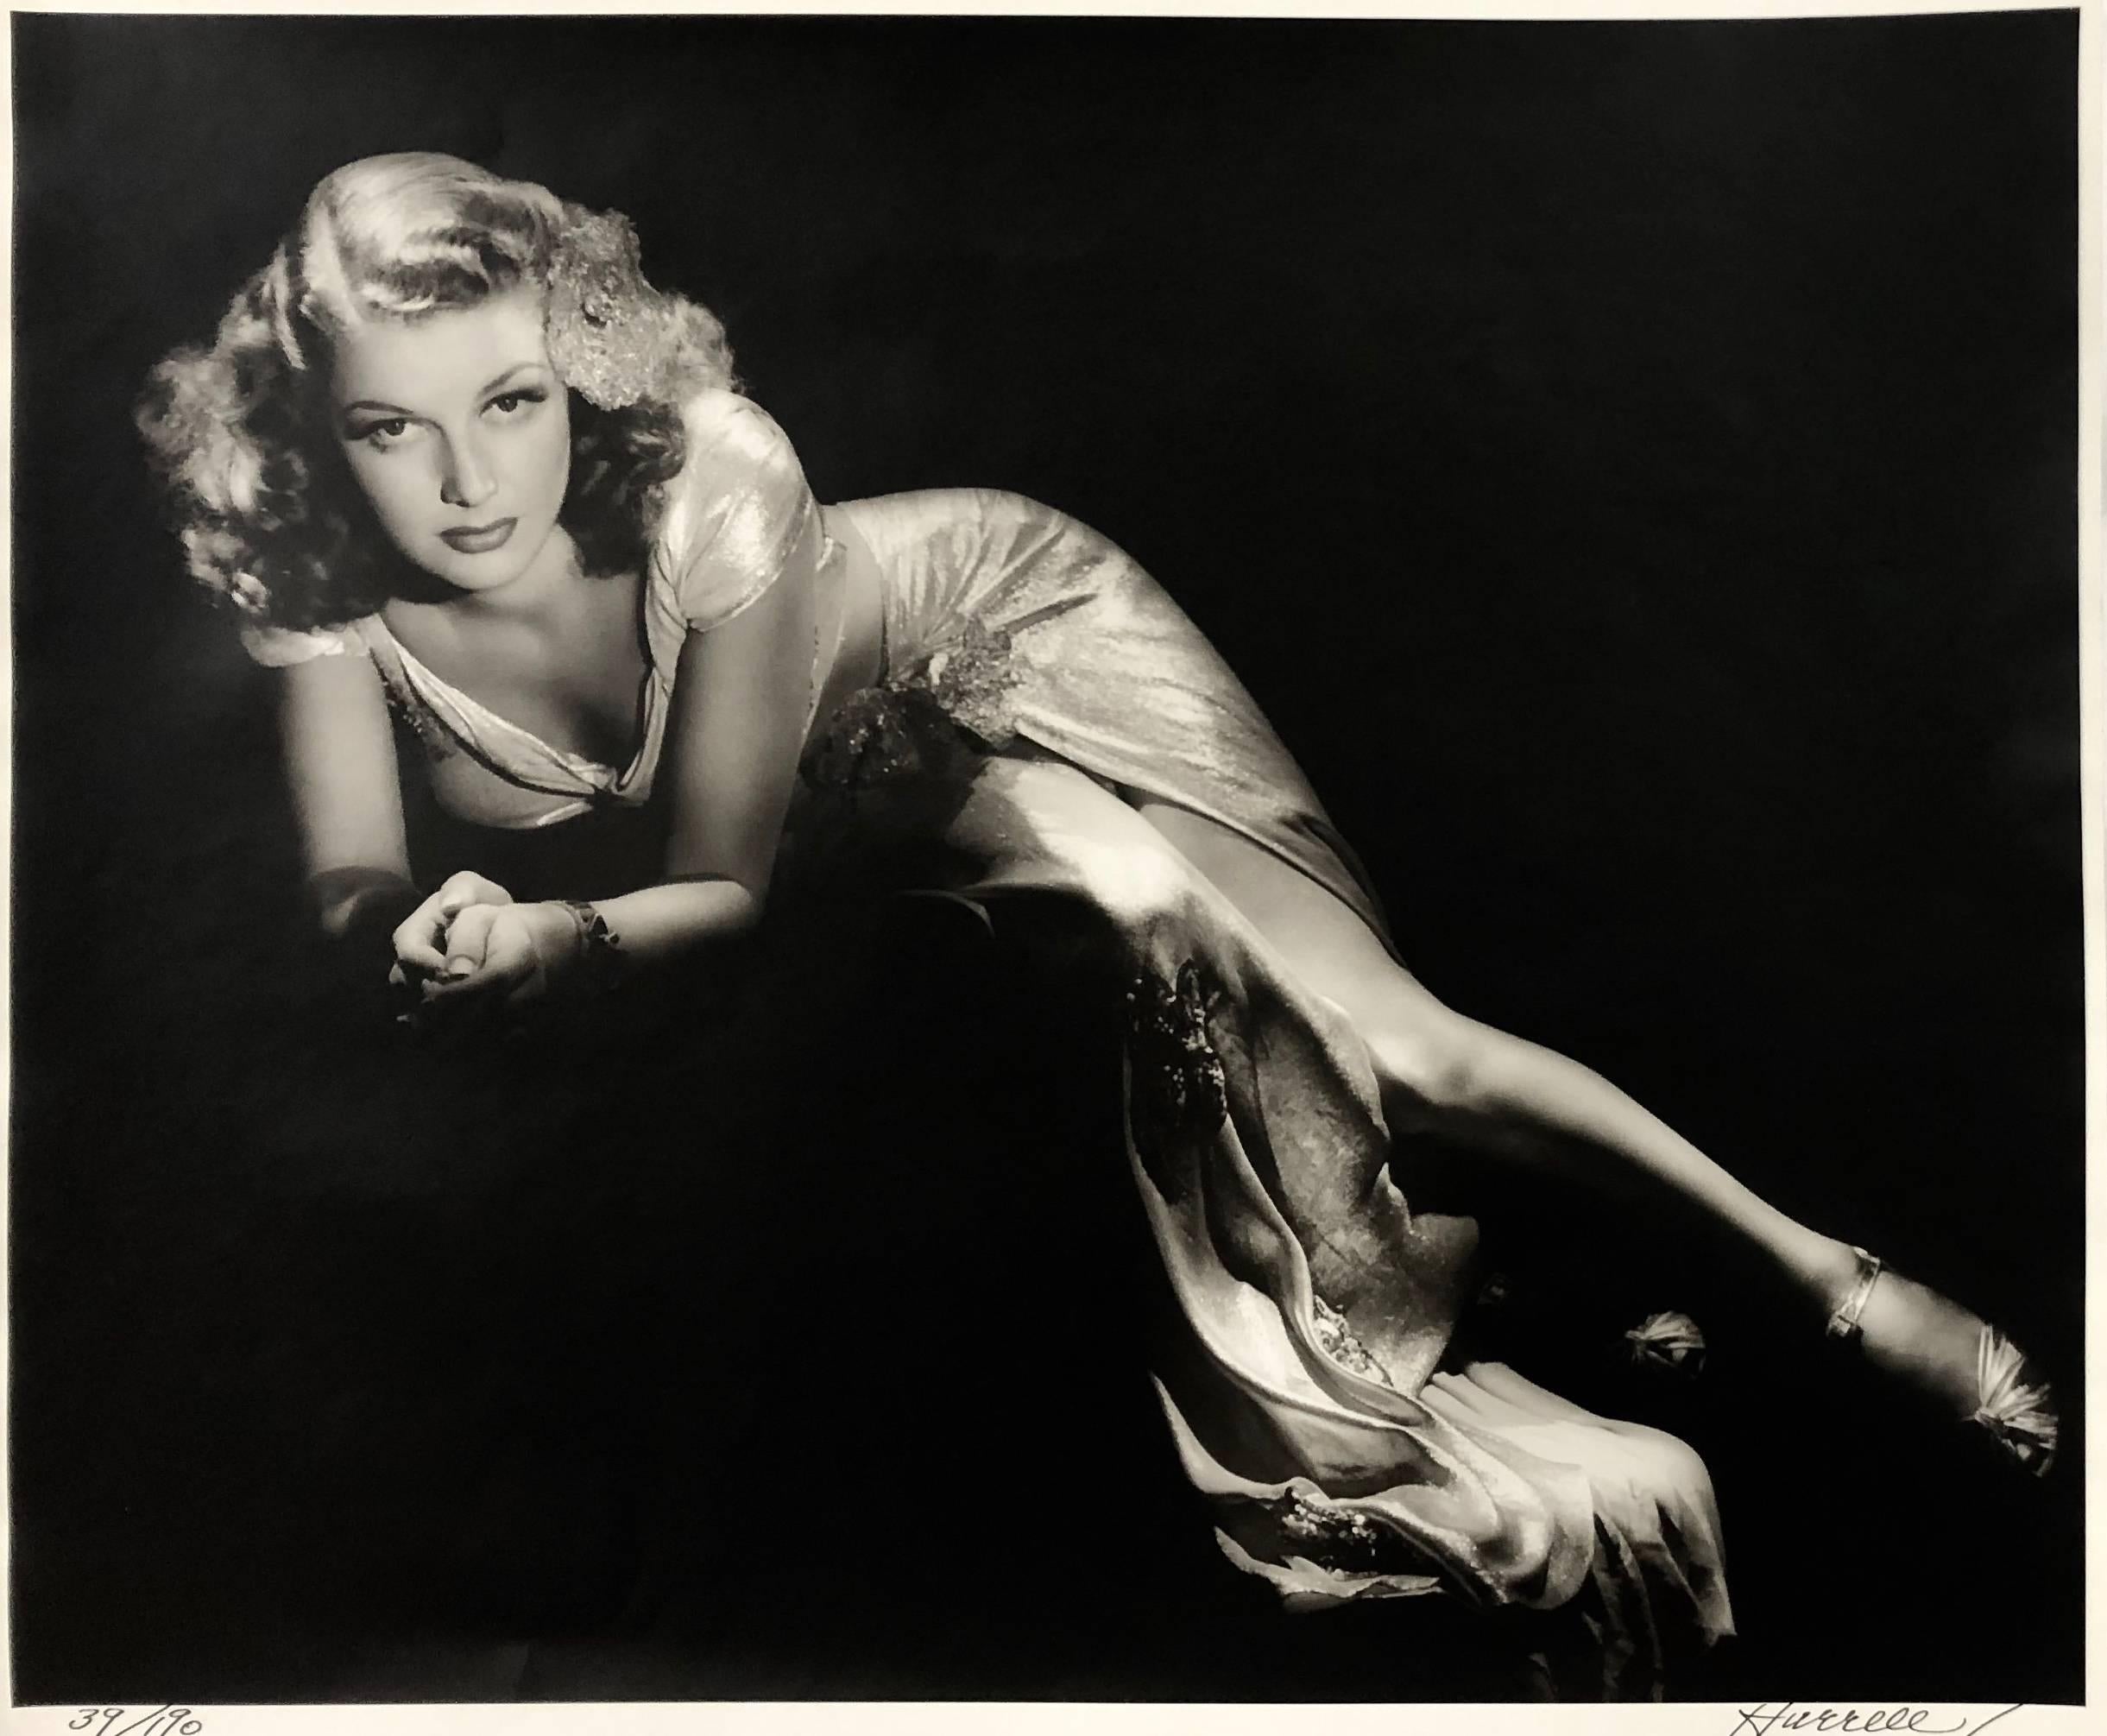 George Hurrell Portrait Photograph – Ann Sheridan